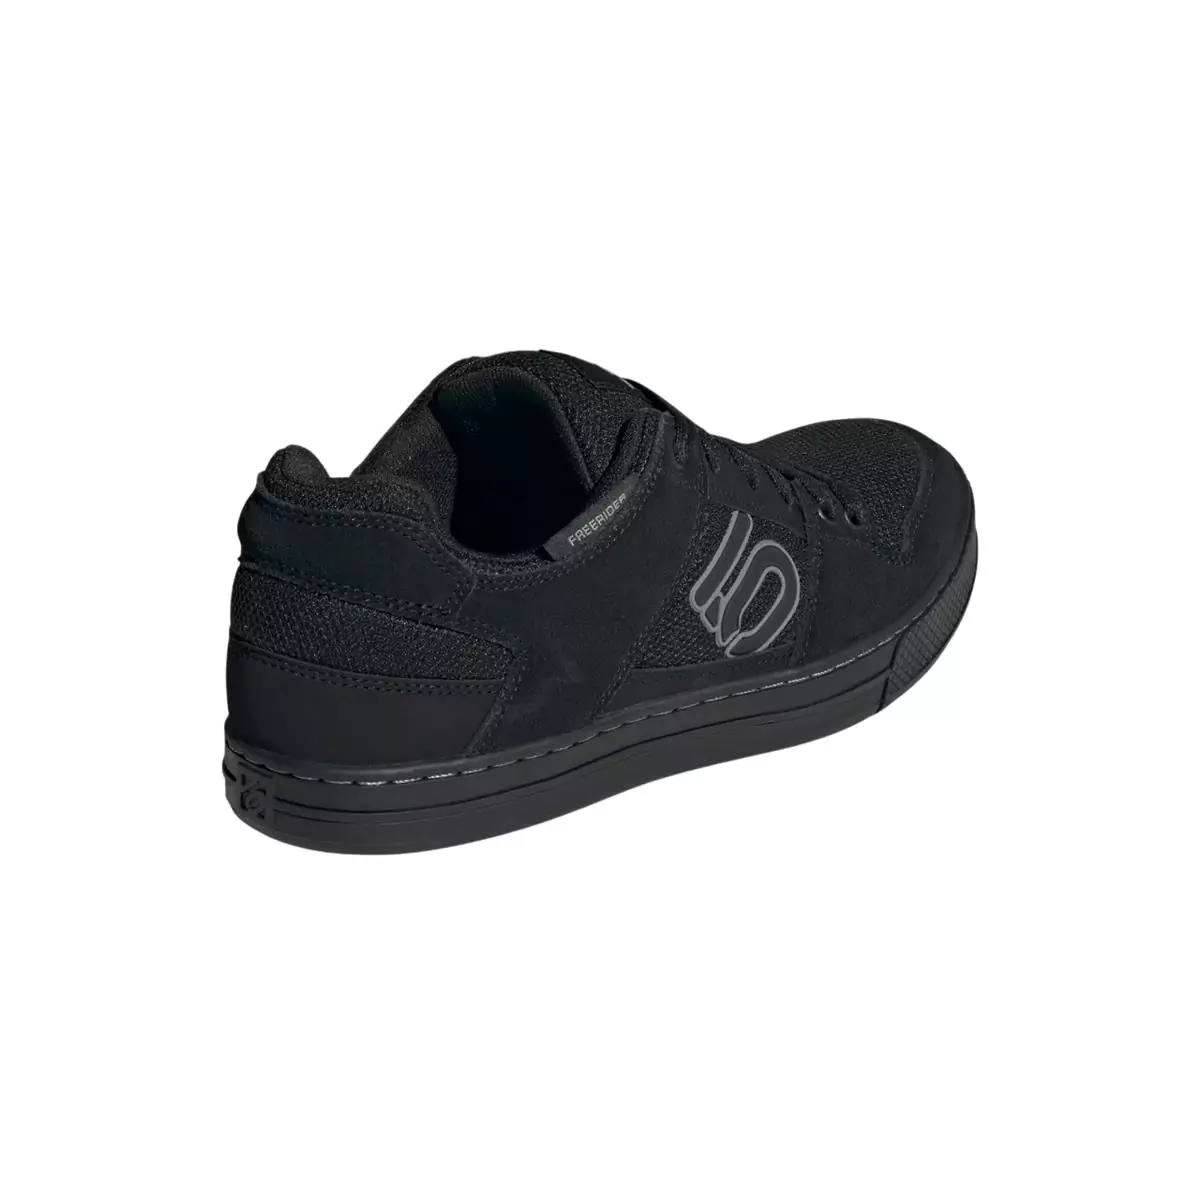 MTB Shoes Flat Freerider Black Size 46 #5